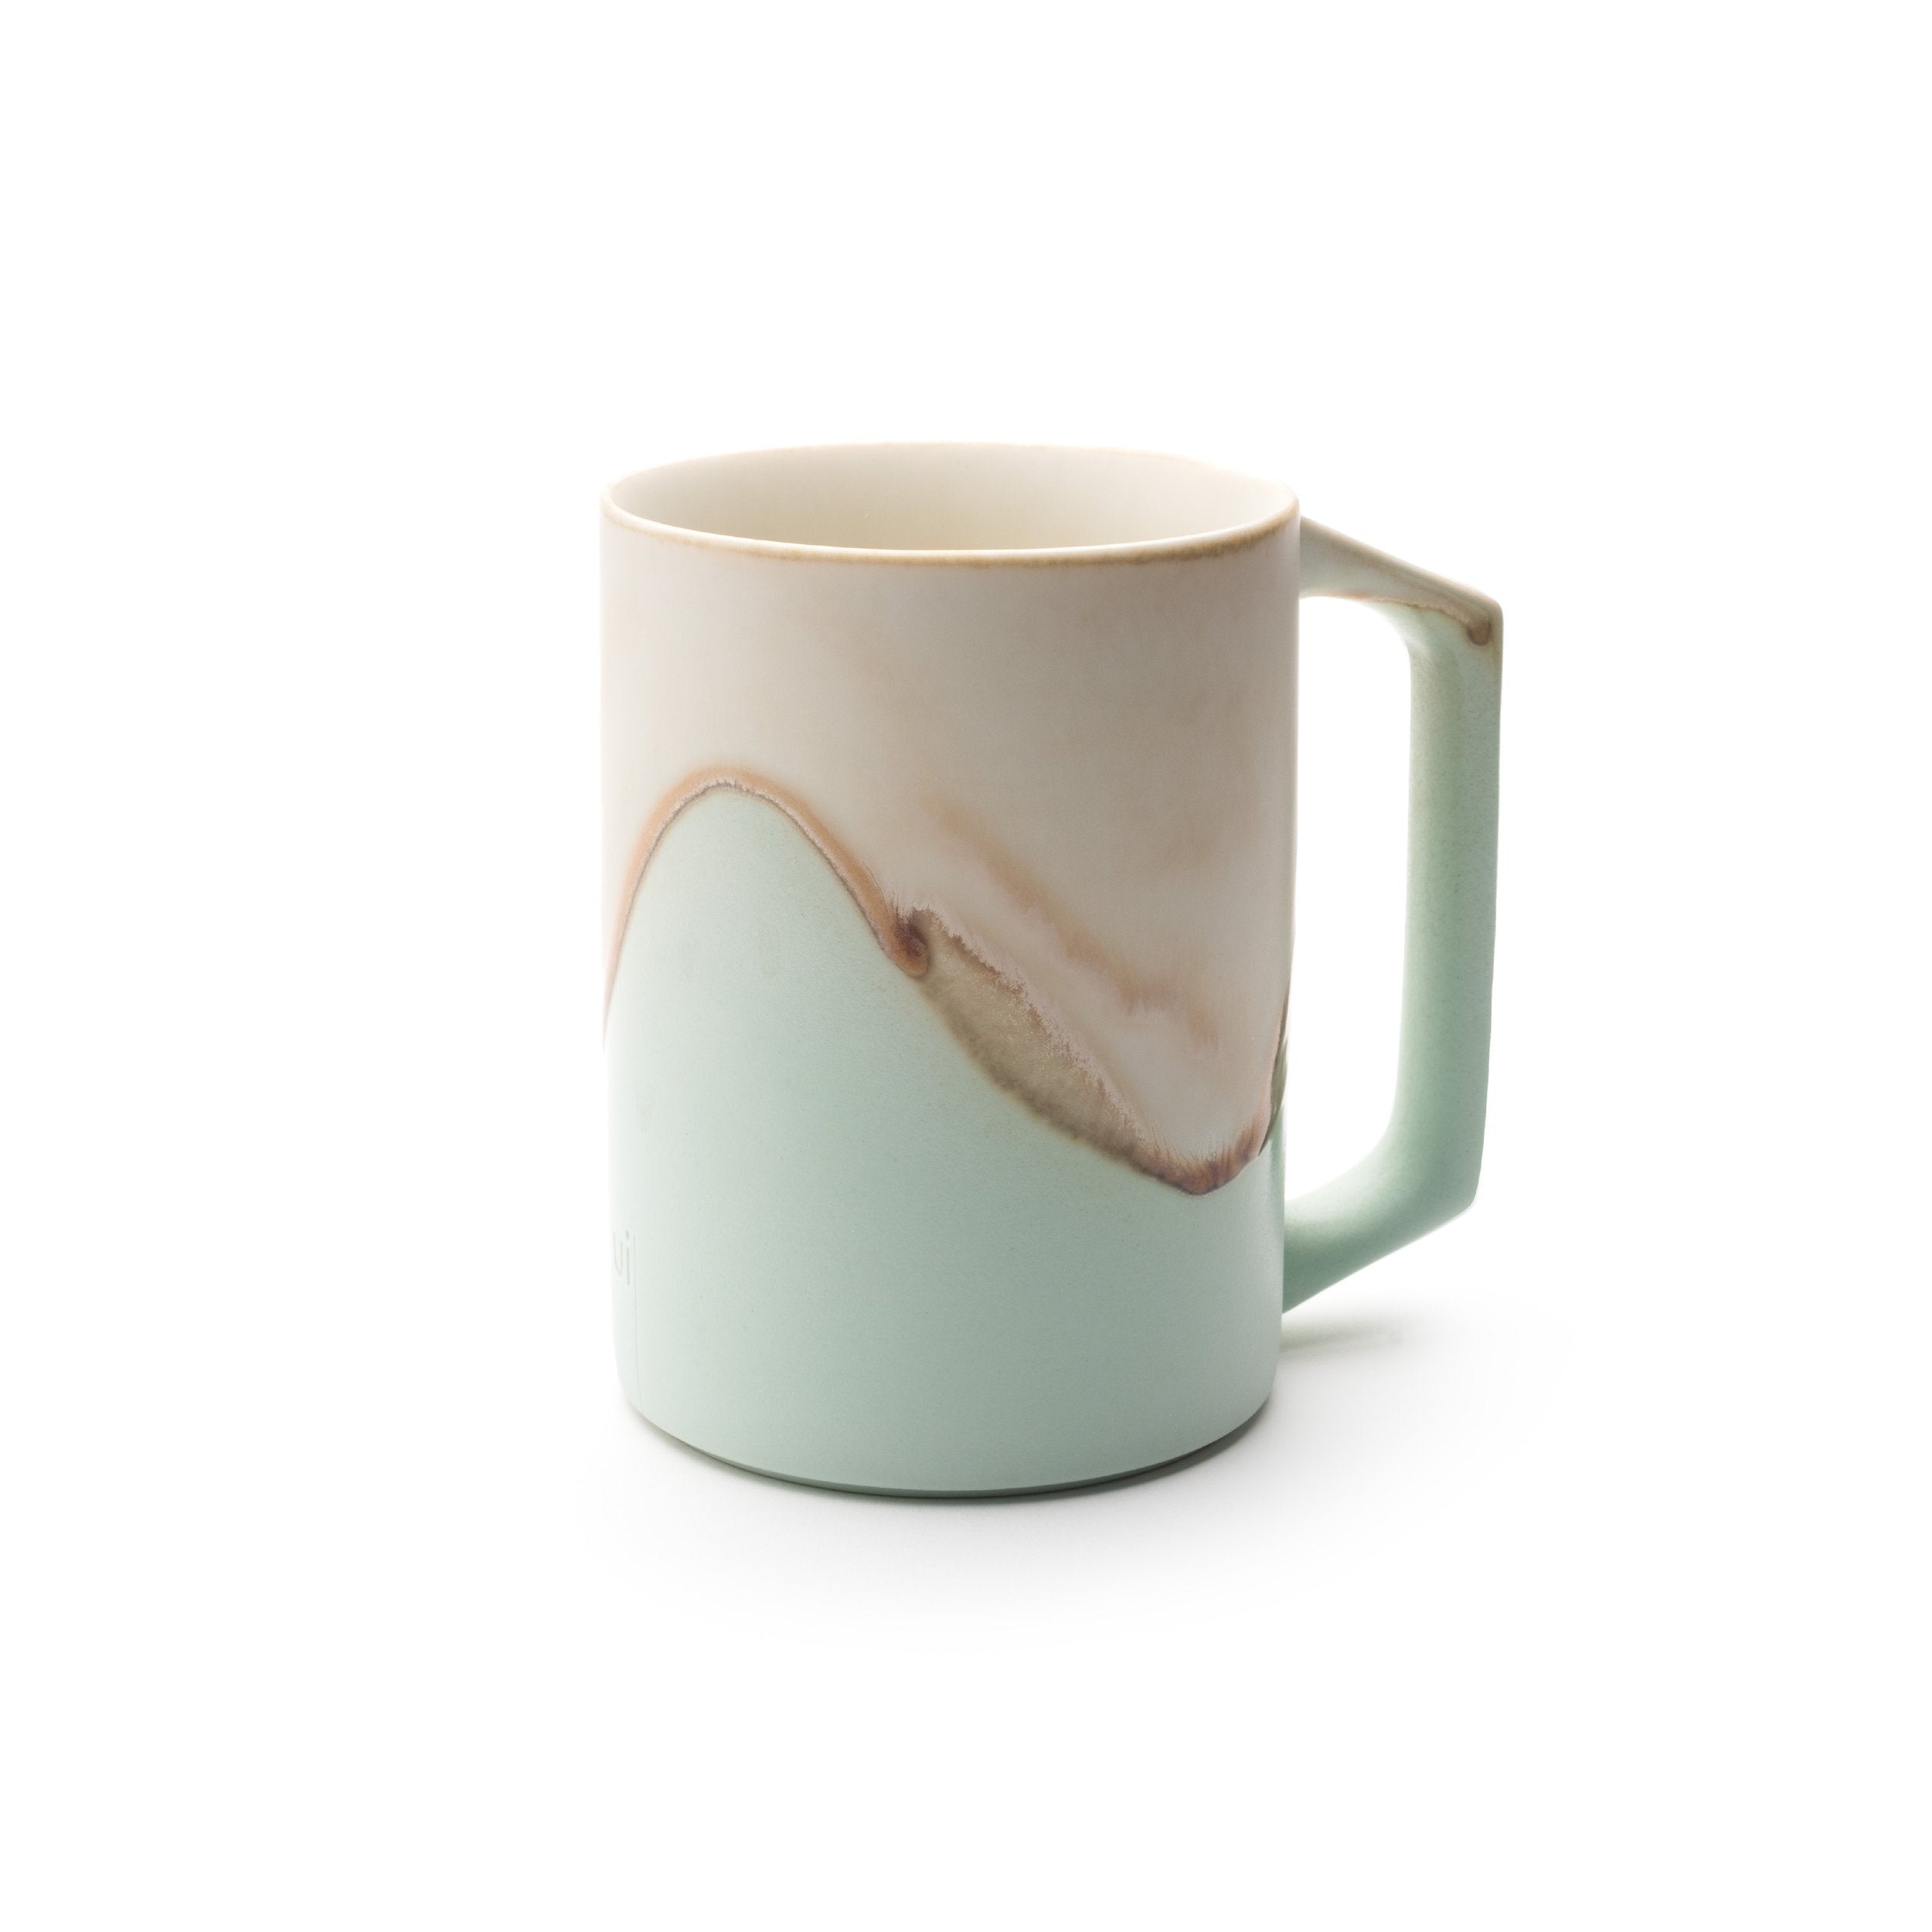 Mint colored mug with design